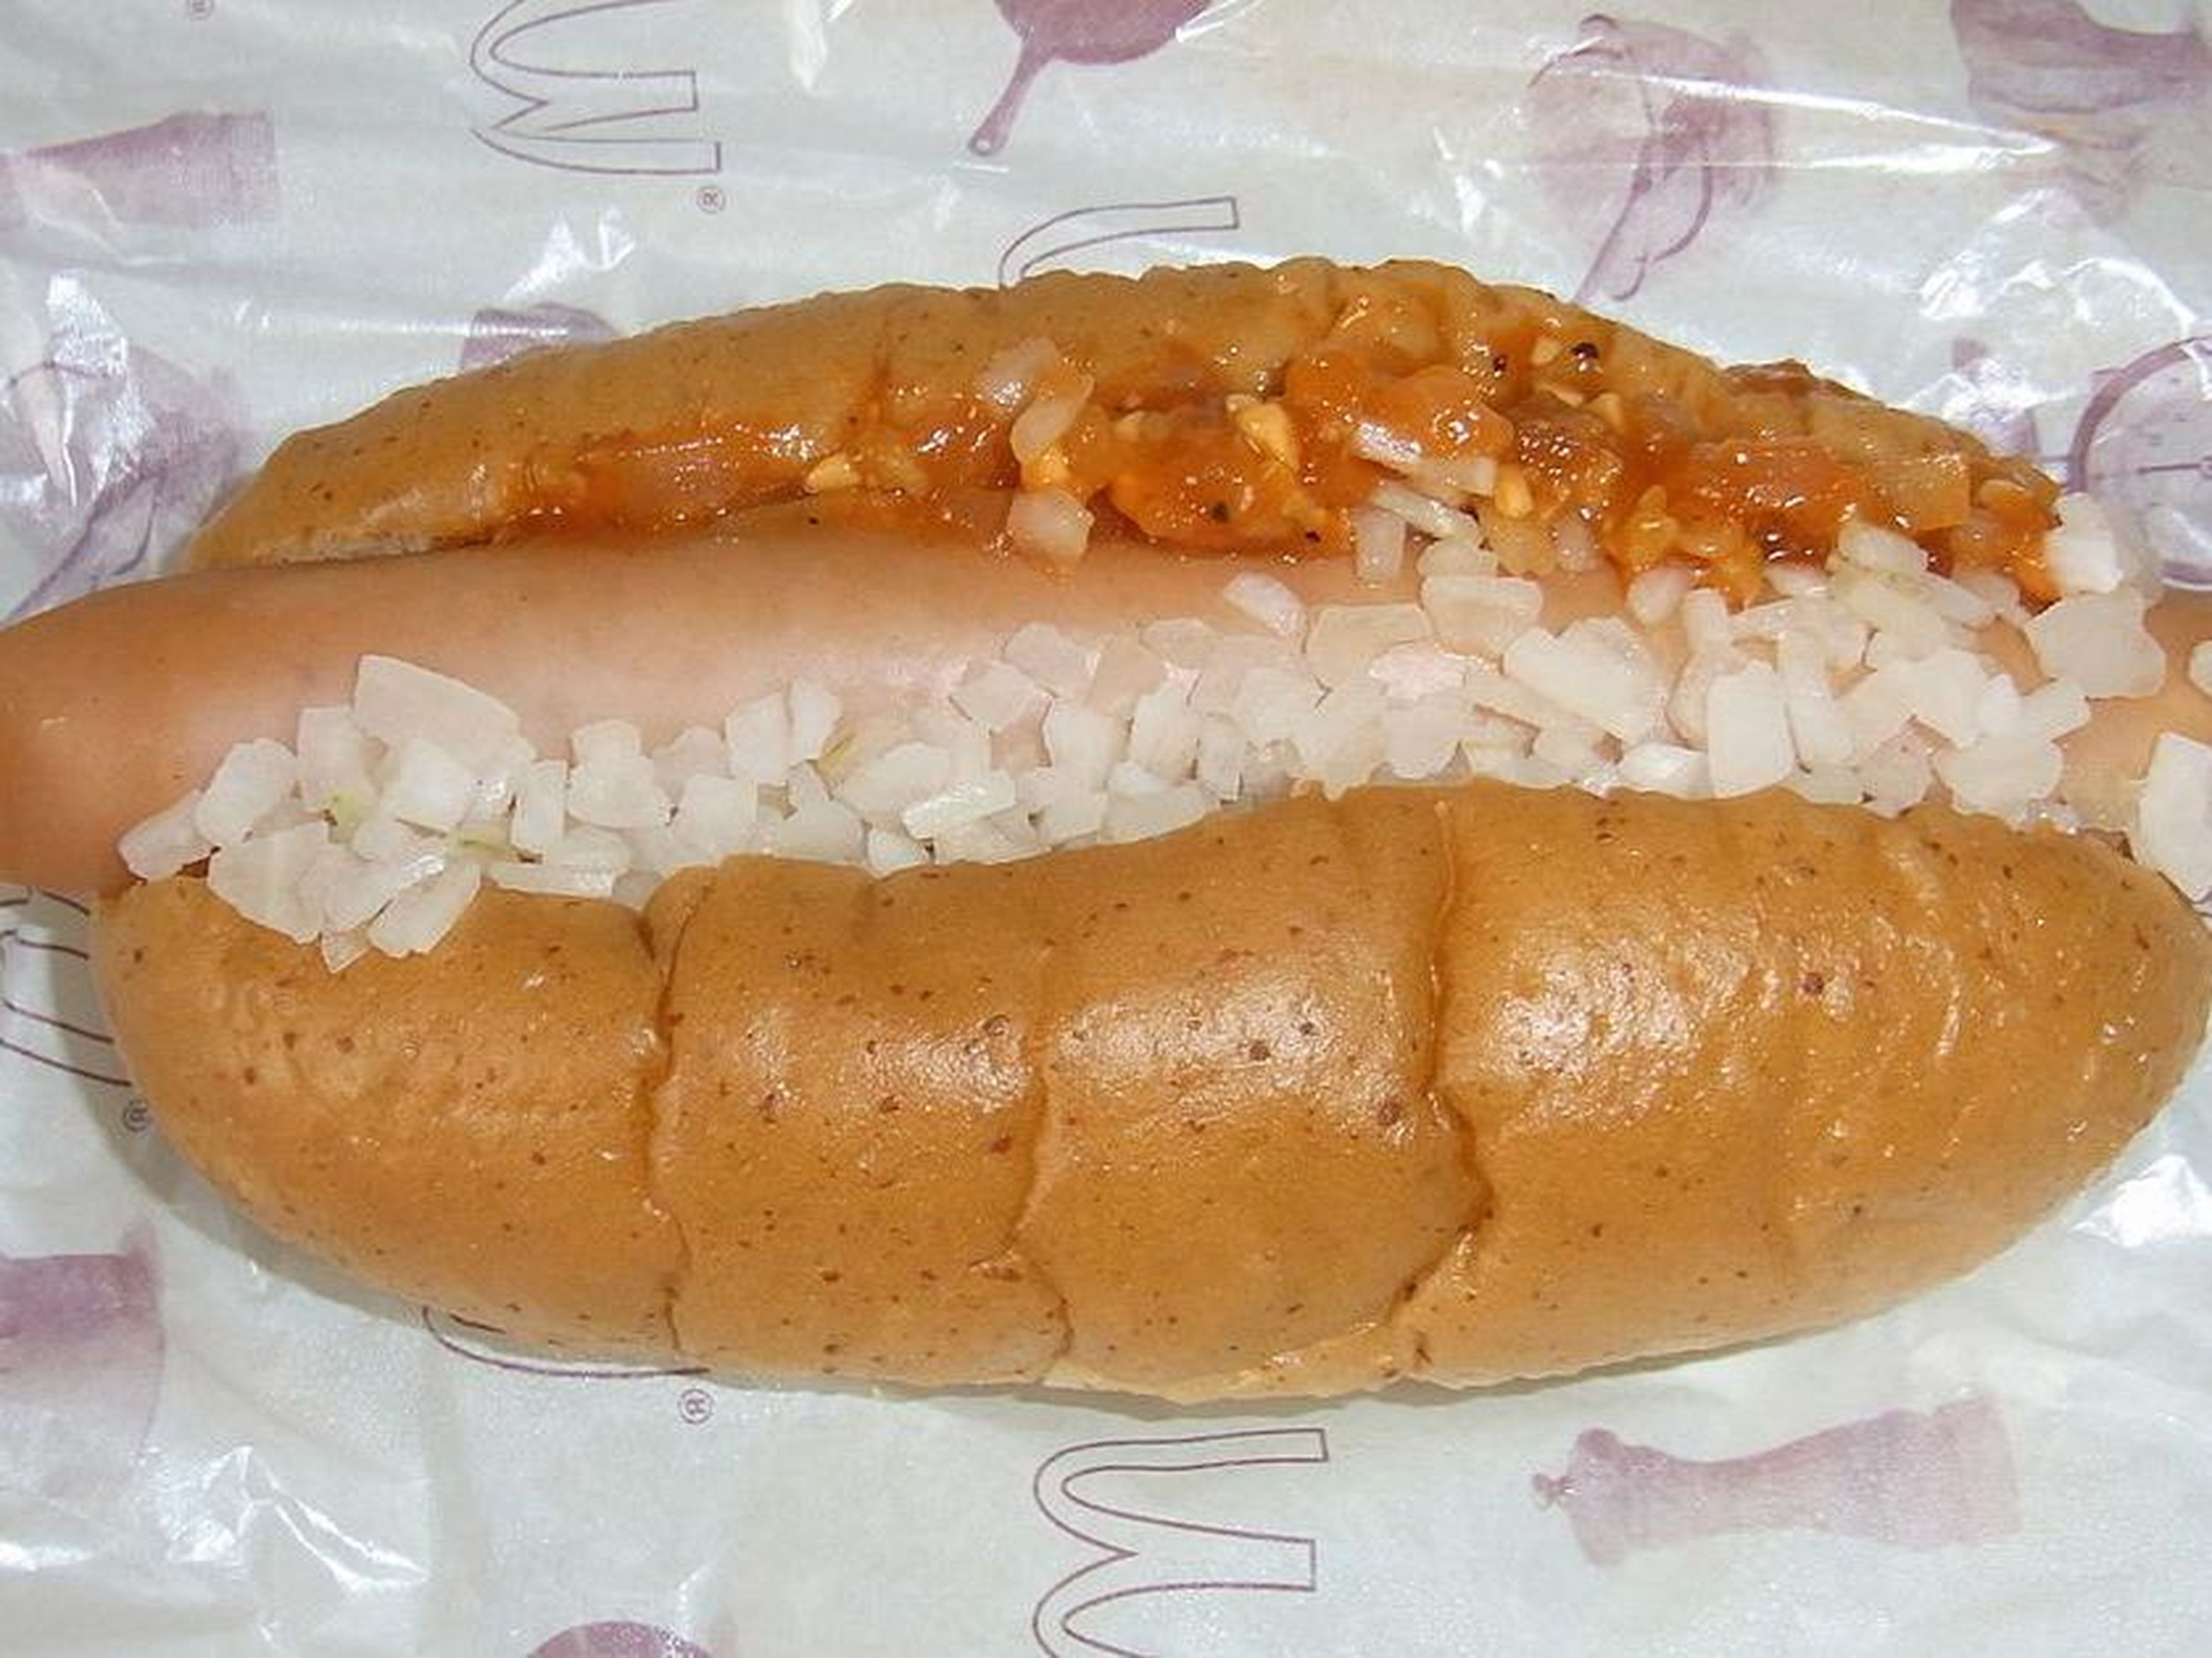 hot dog McDonald's